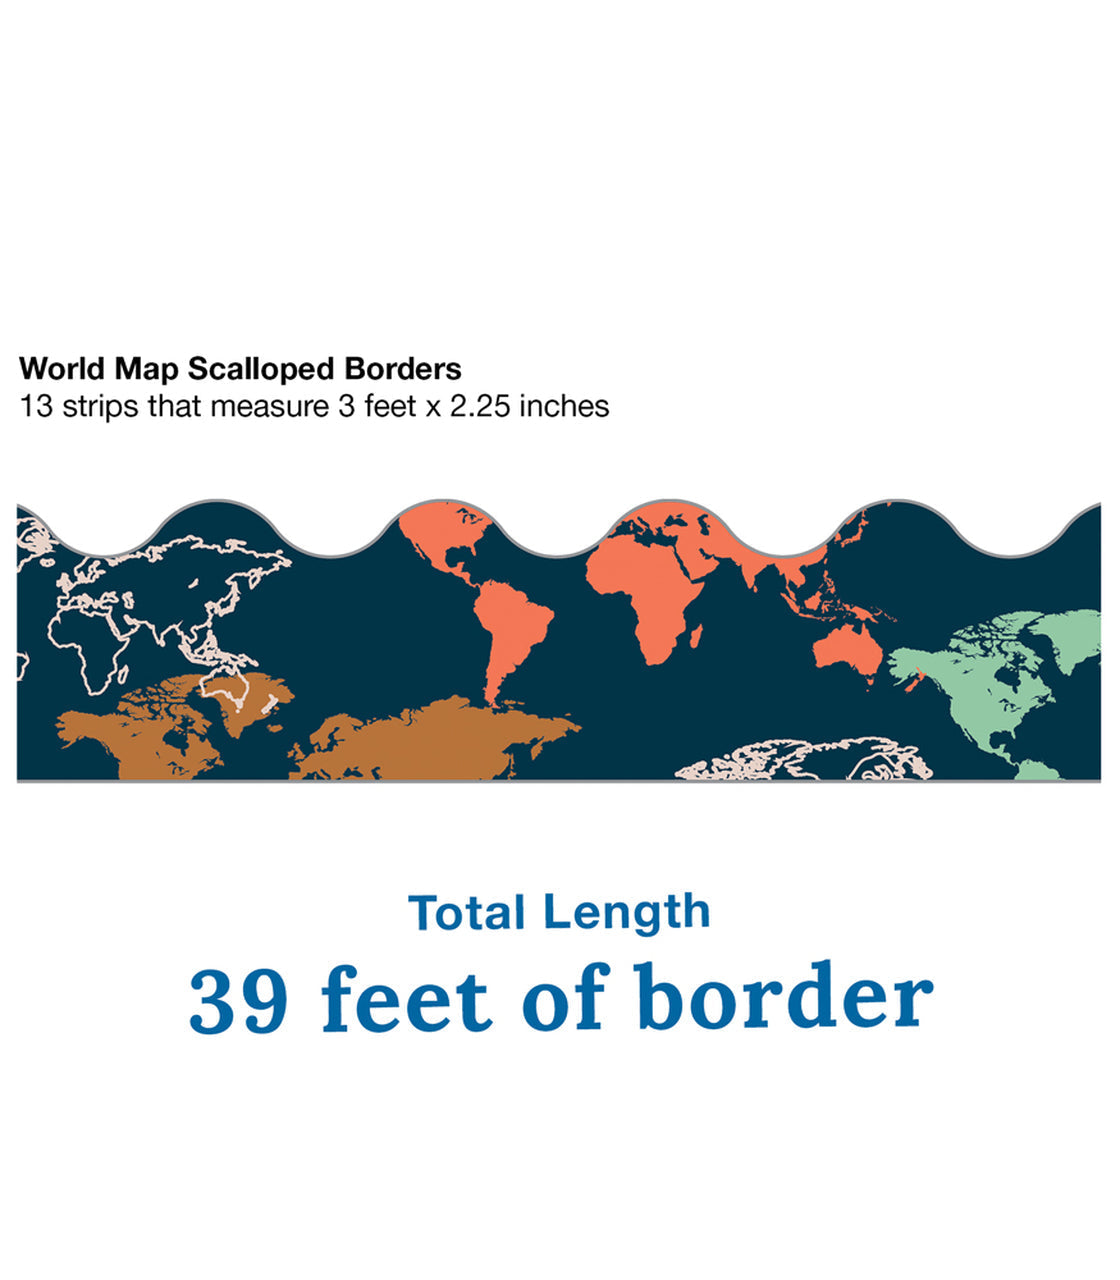 World Map Scalloped Borders